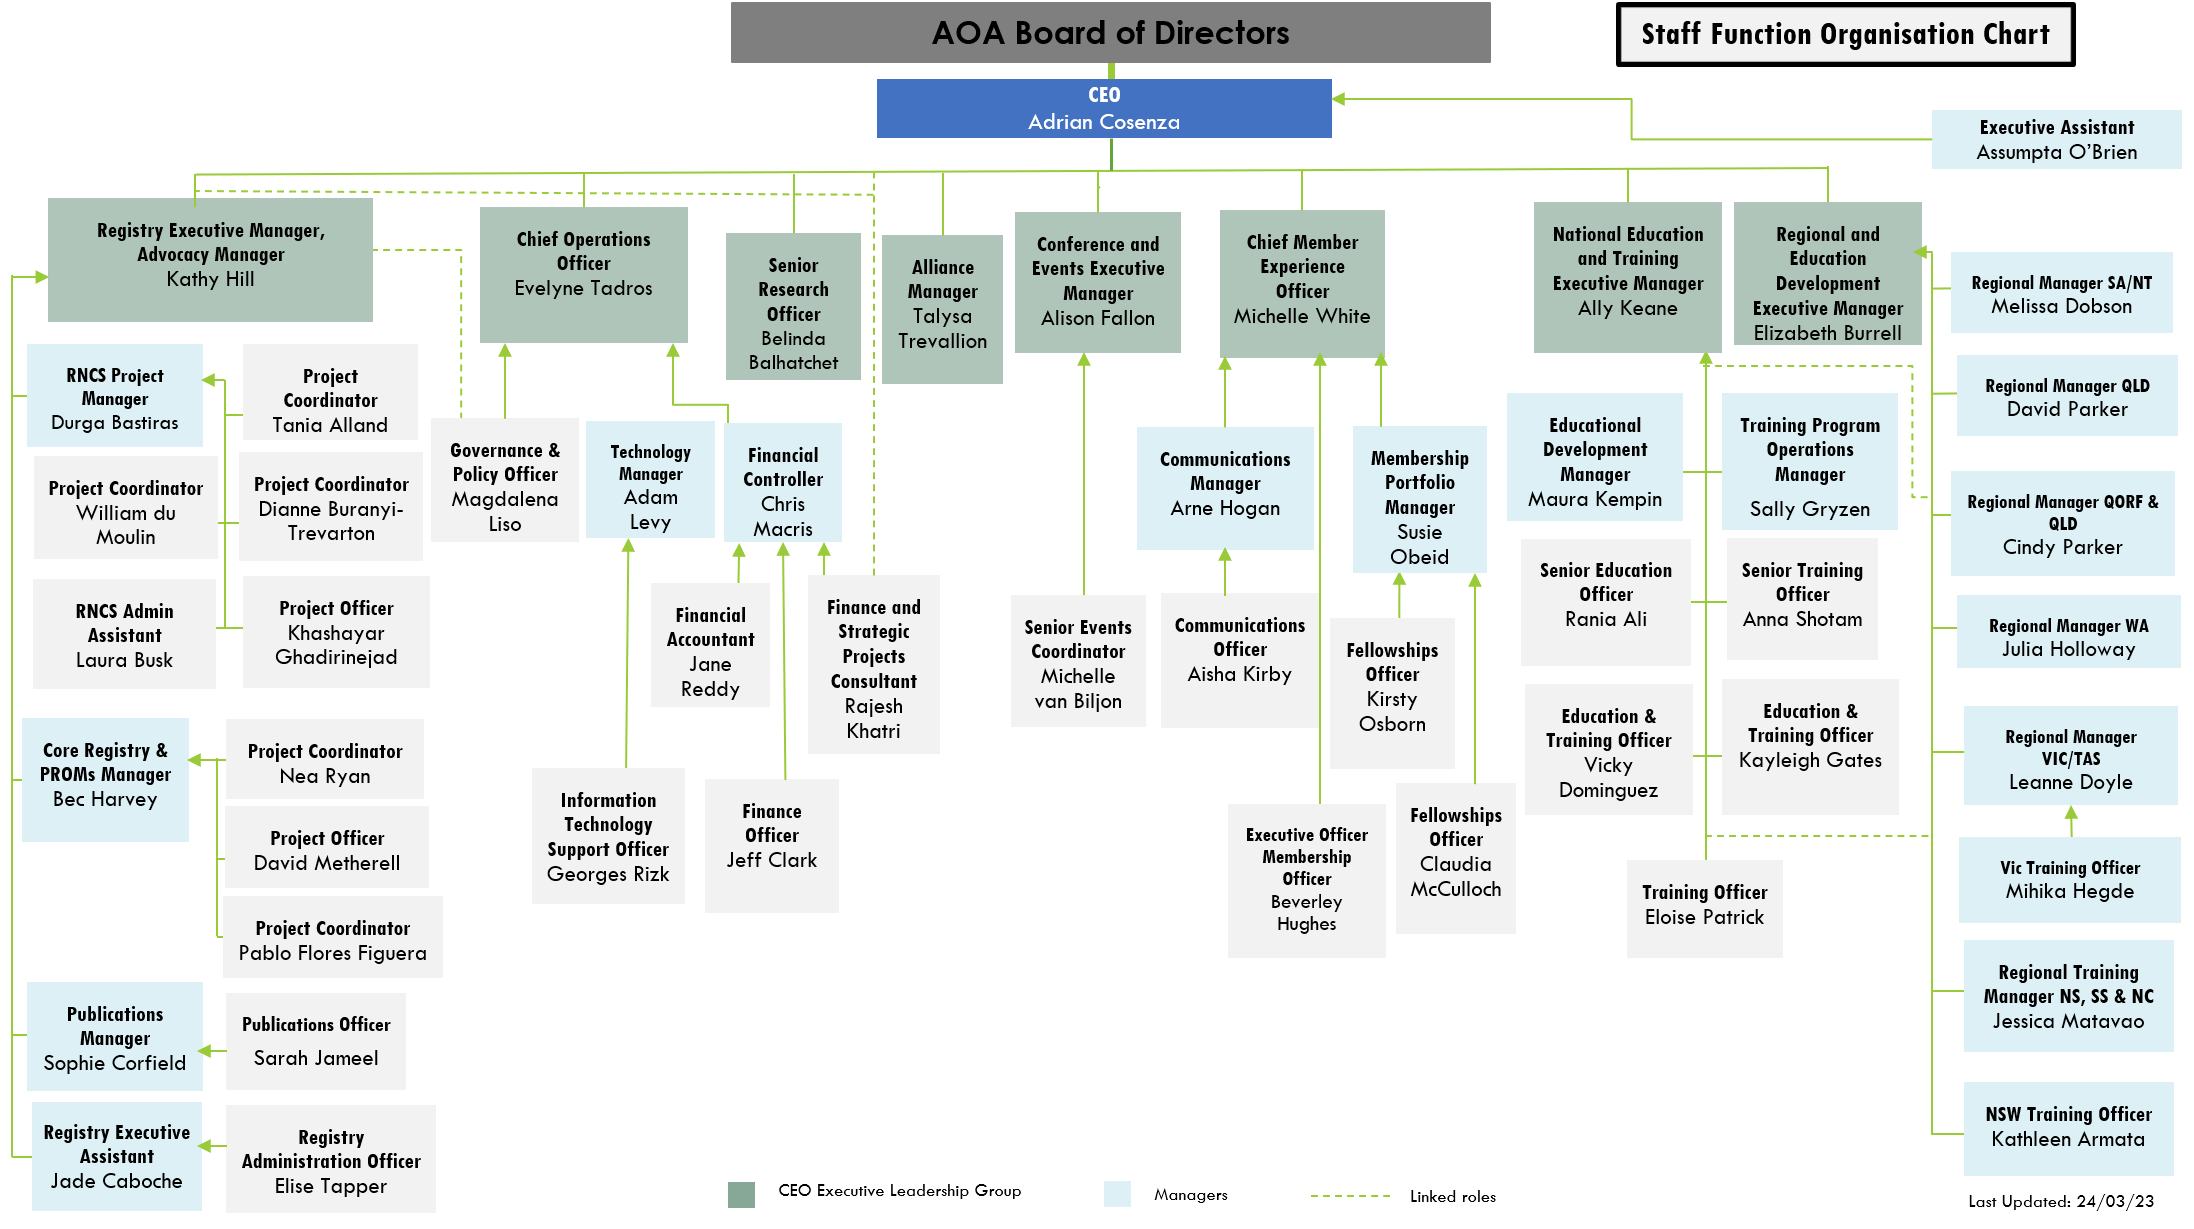 AOA Staff Organisation Chart_20230331